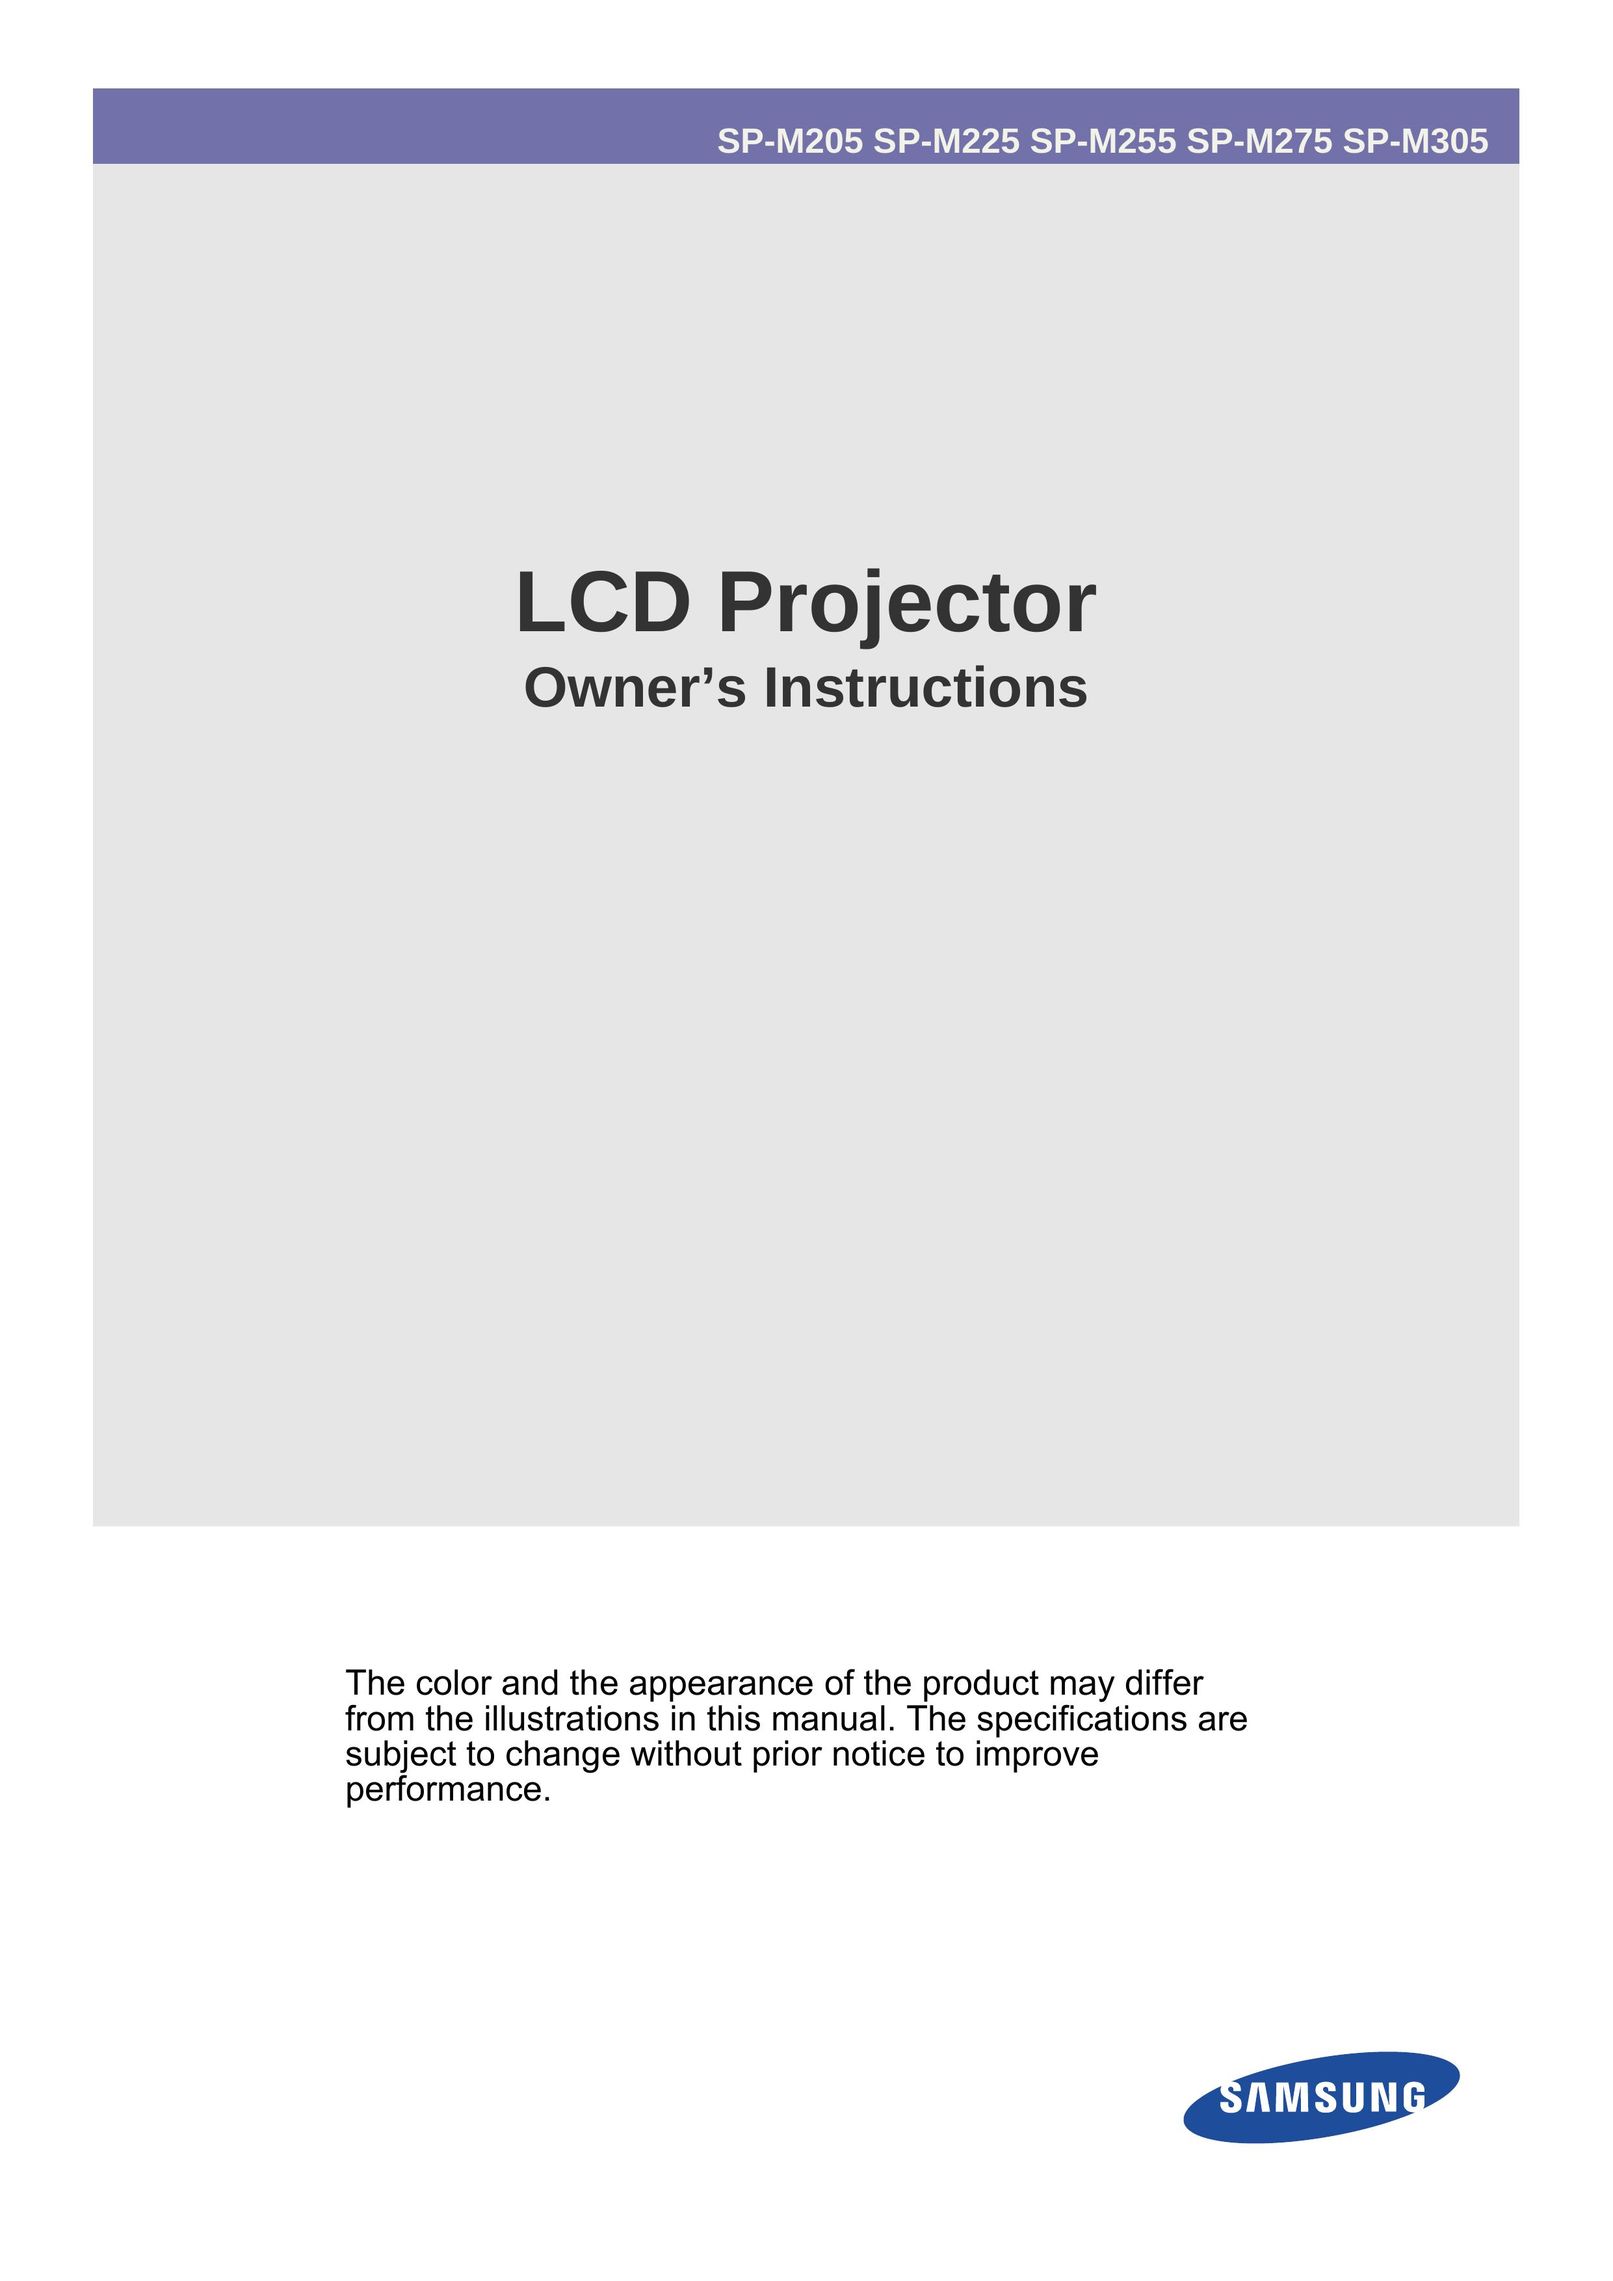 Samsung SP-M225 Projector User Manual